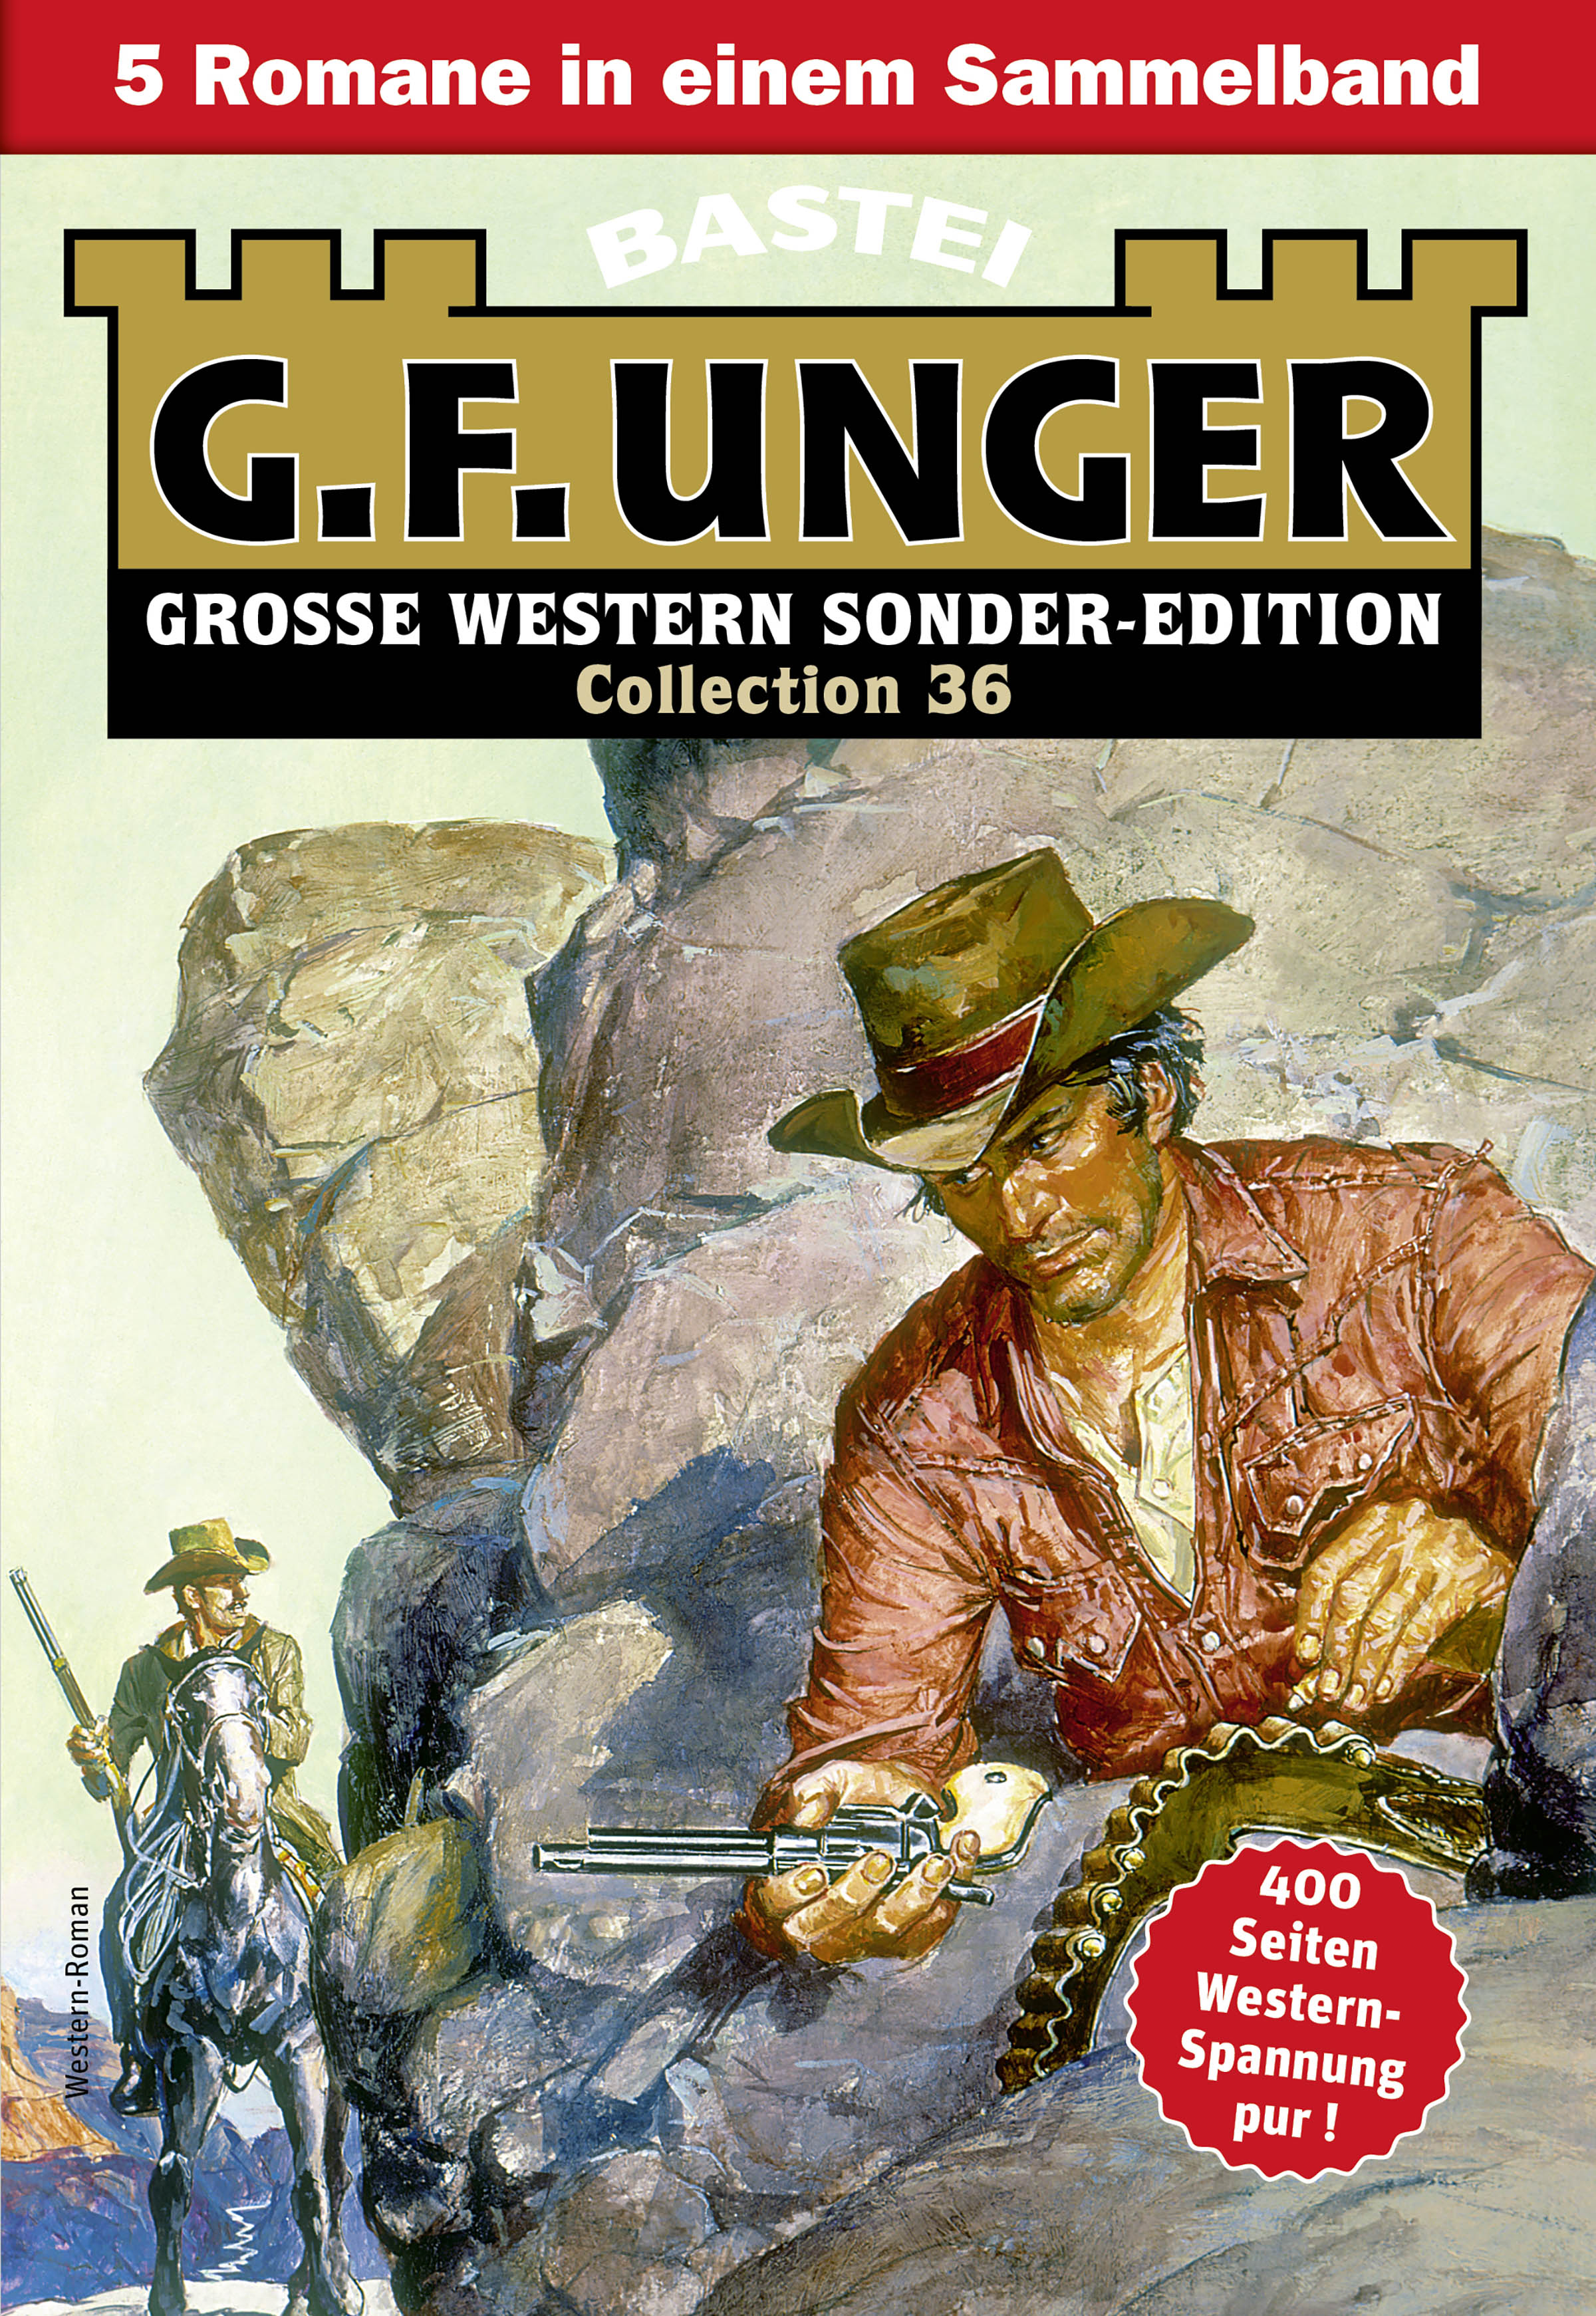 G. F. Unger Sonder-Edition Collection